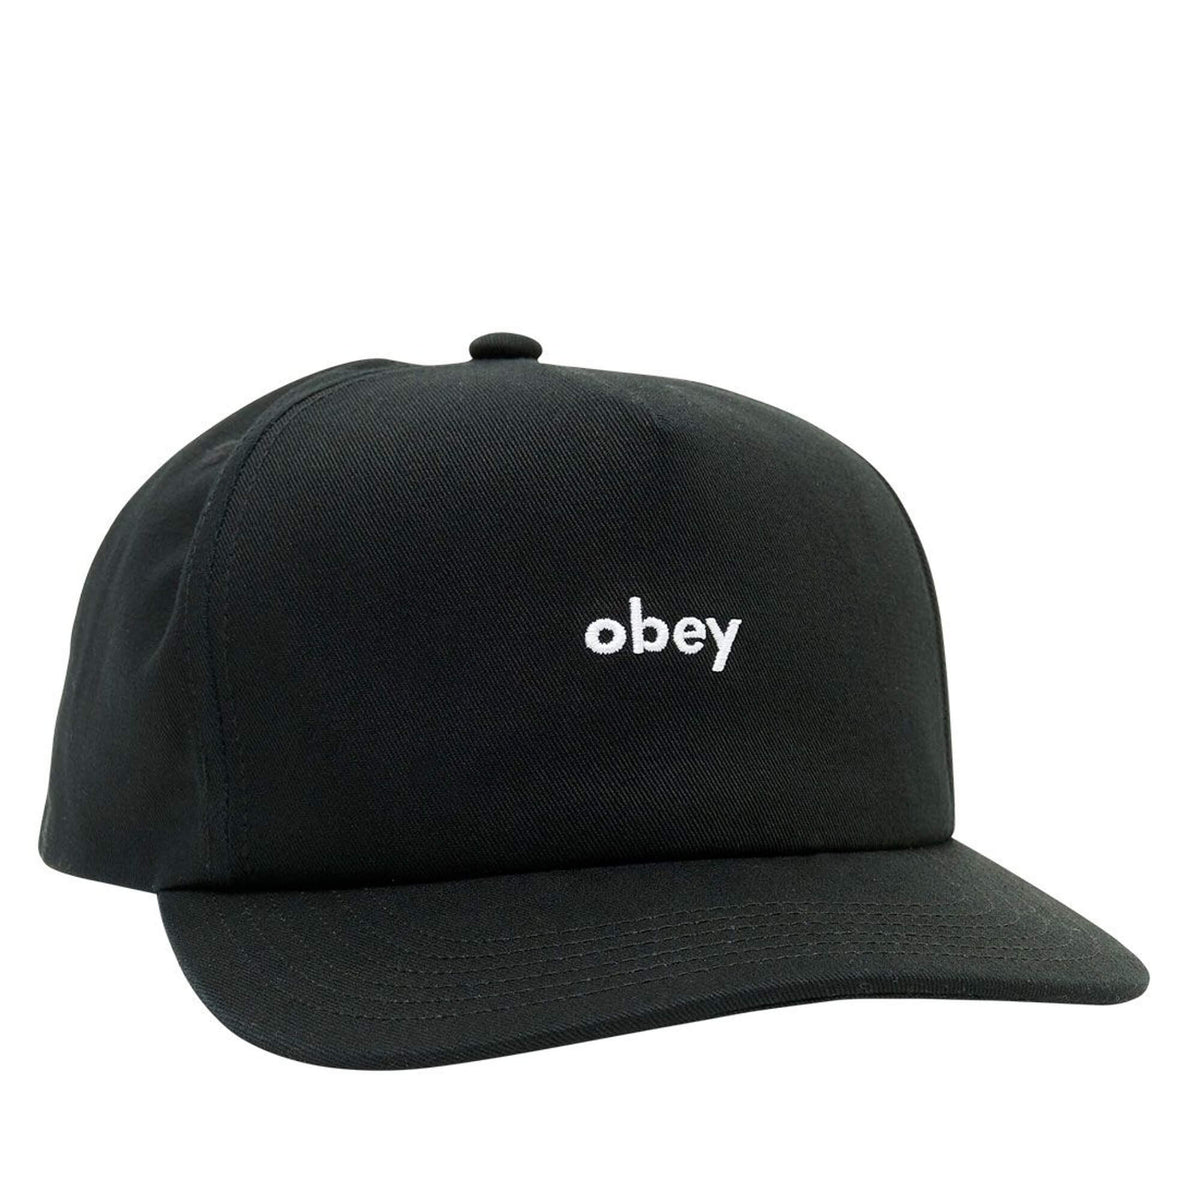 OBEY Lowercase Snapback Cap Black